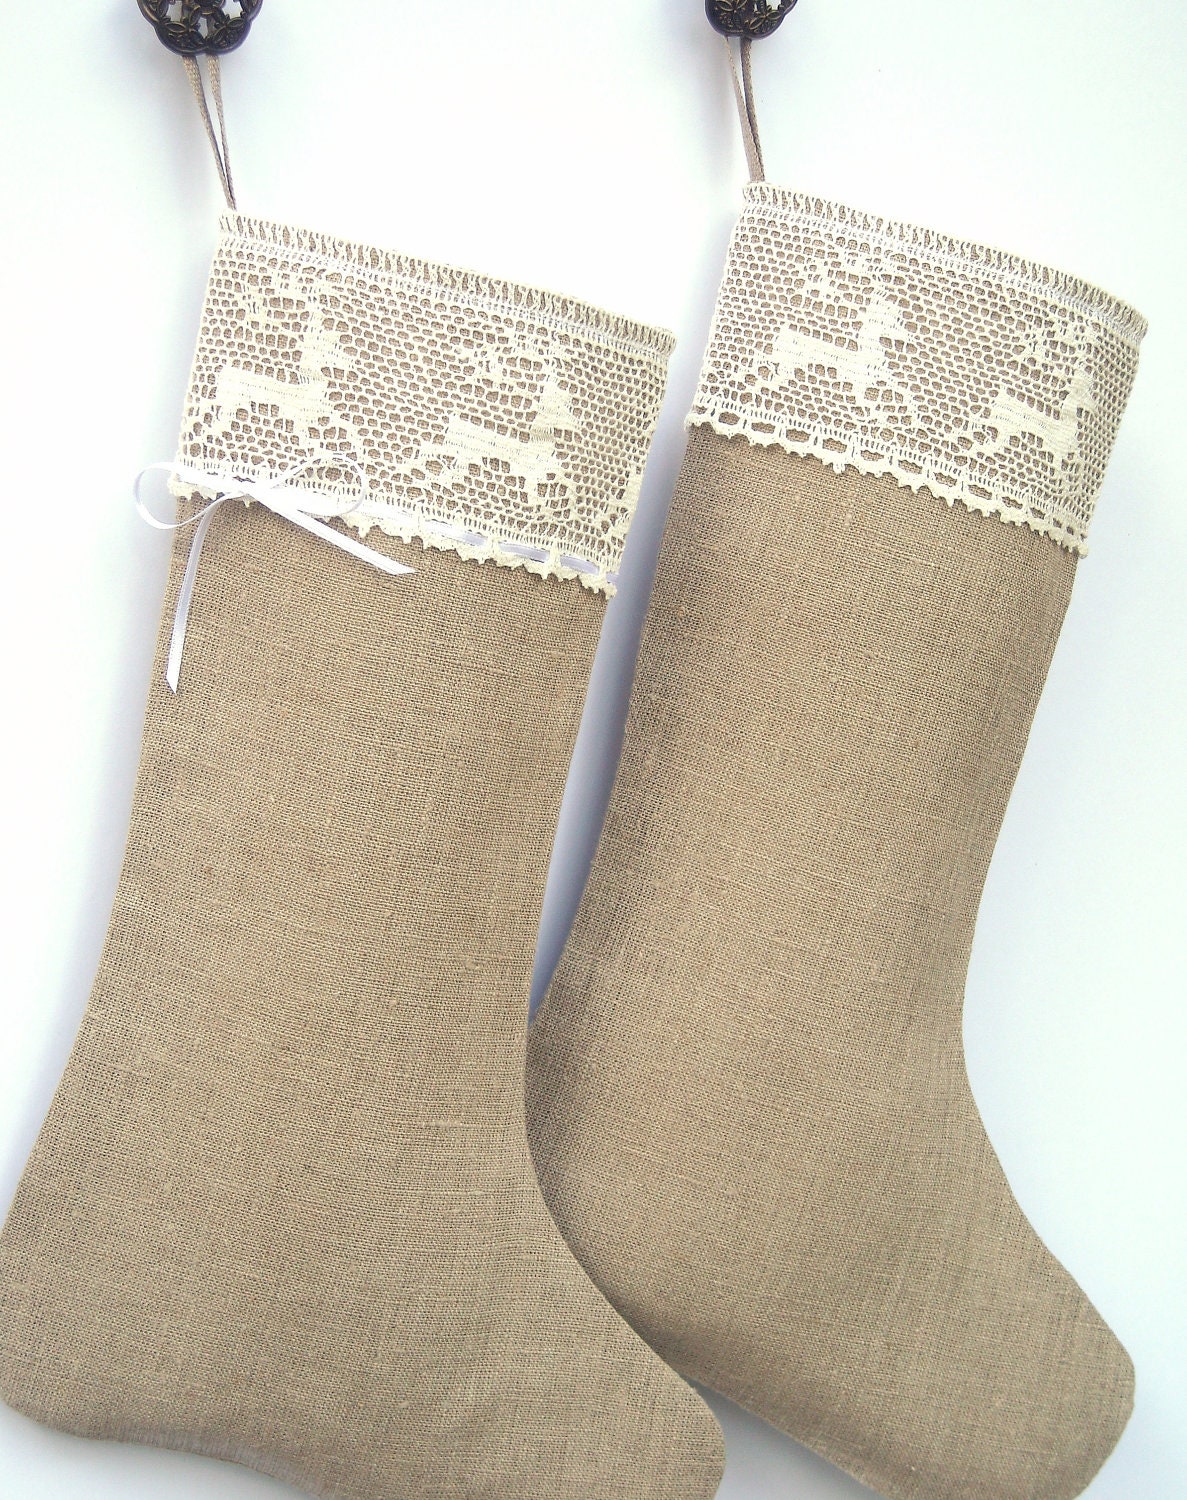 Scandinavian Christmas stocking - Linen Burlap stocking - RESERVED